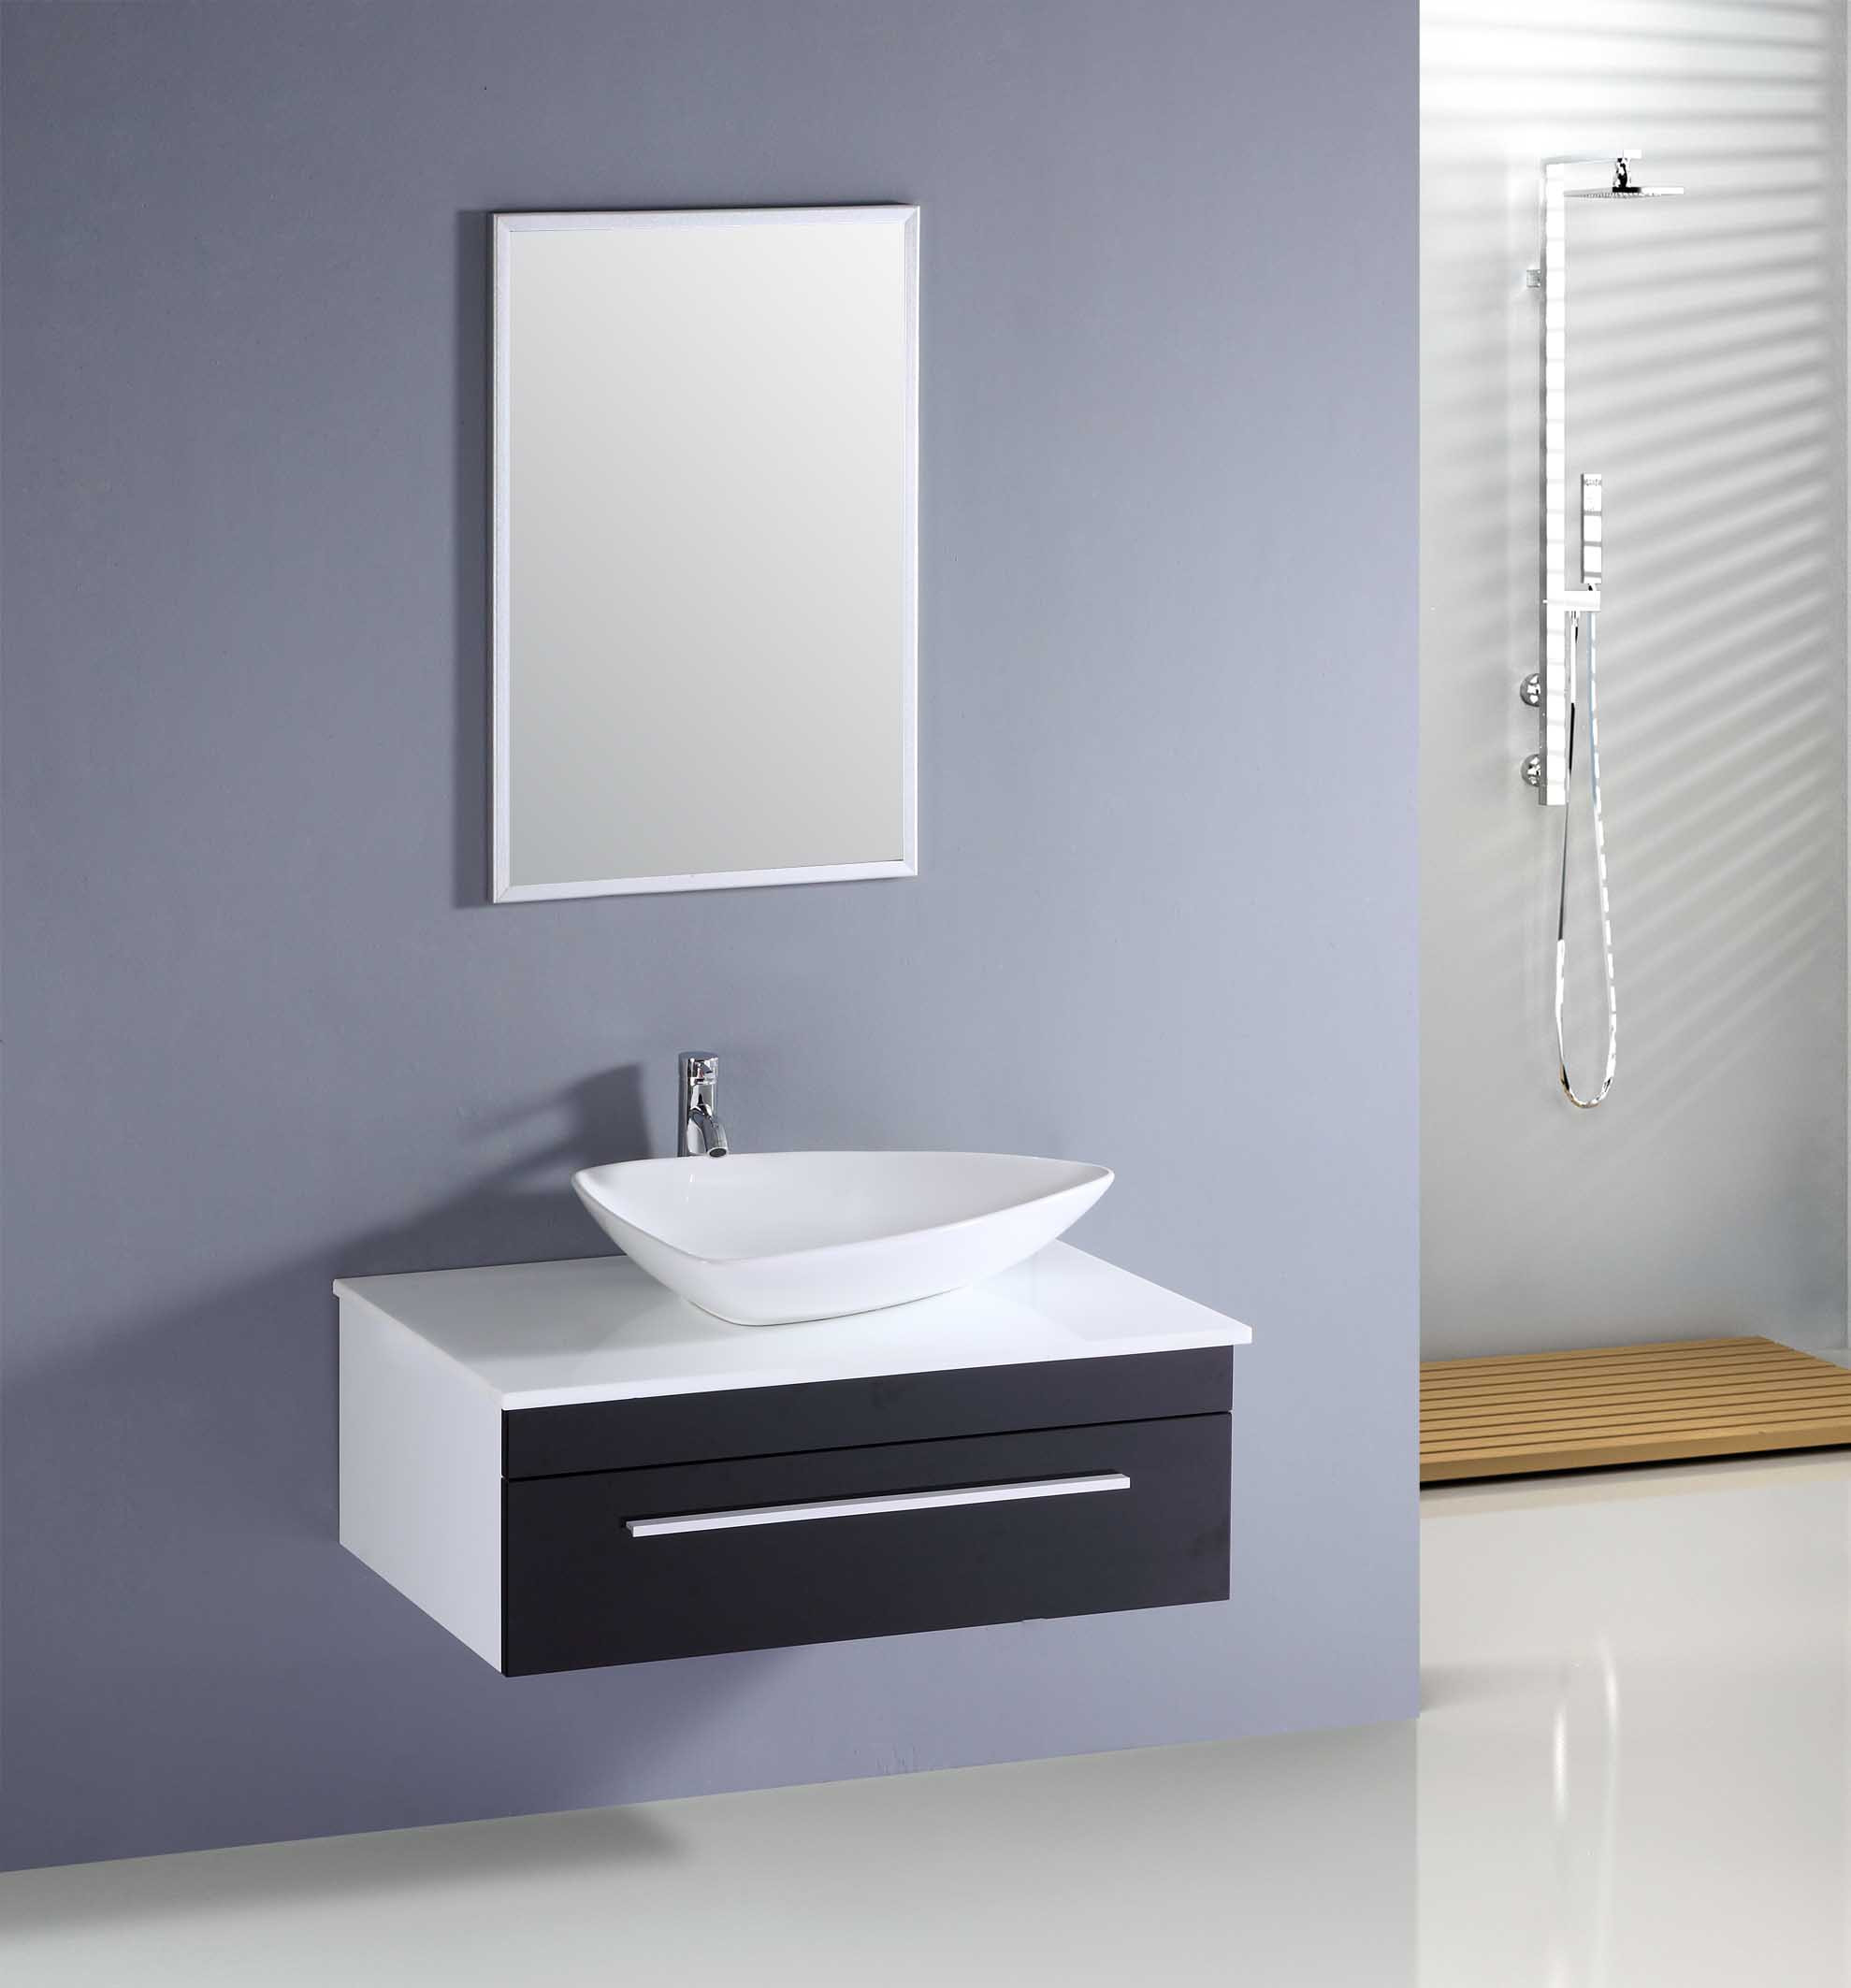 Bathroom Mirror Design
 25 Modern Bathroom Mirror Designs